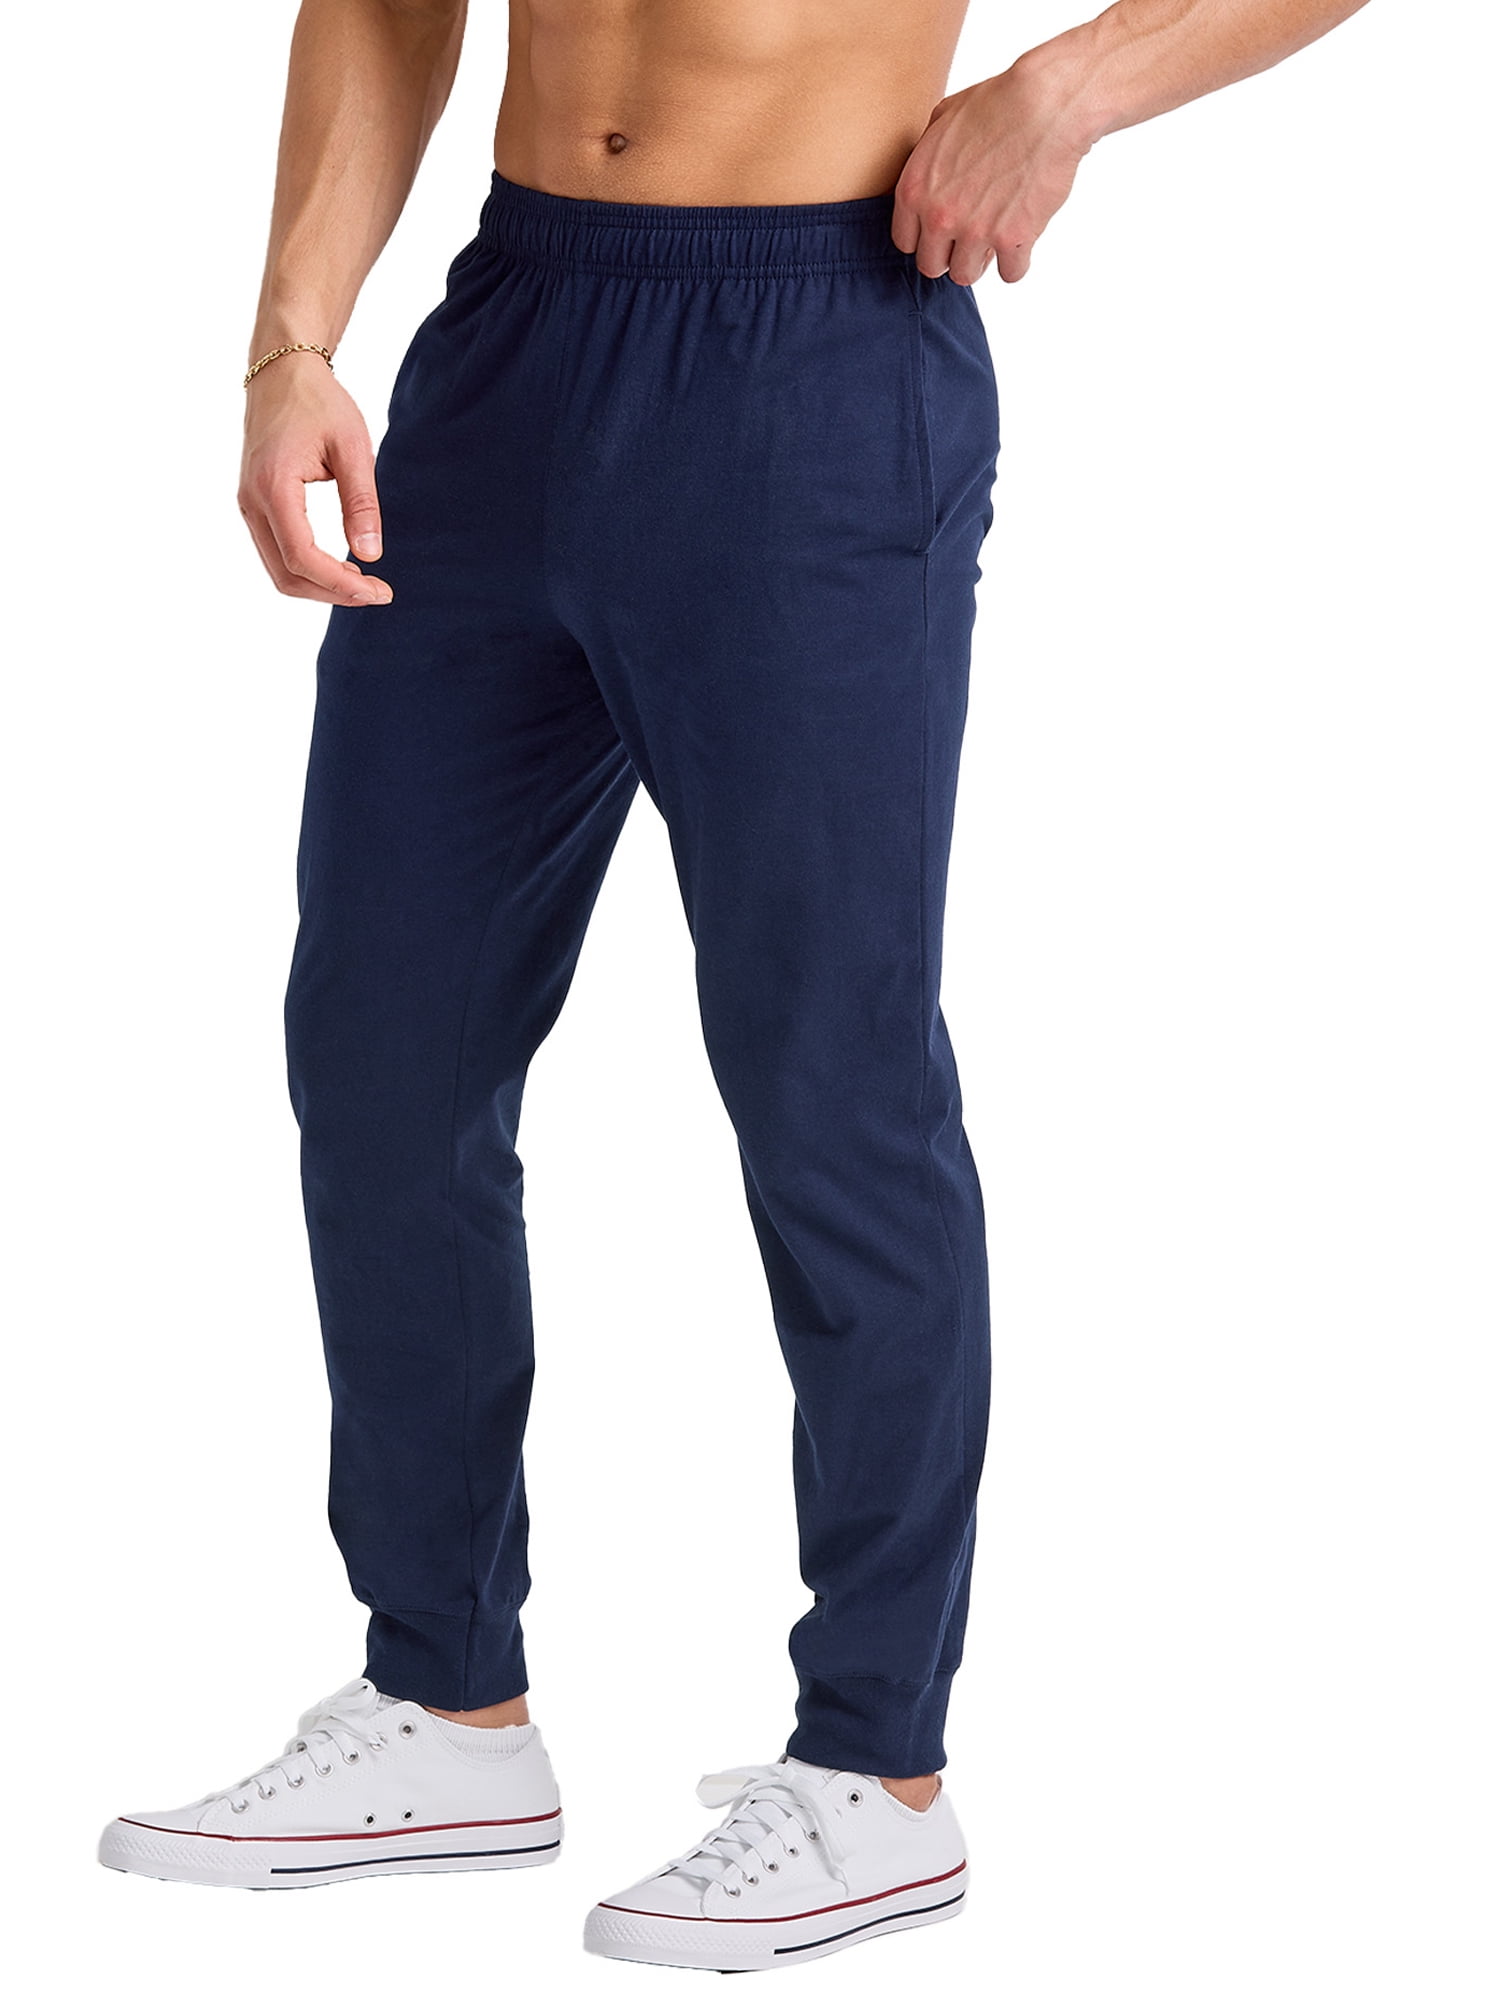 Hanes Originals Men's with Pockets, 100% Cotton Jersey -